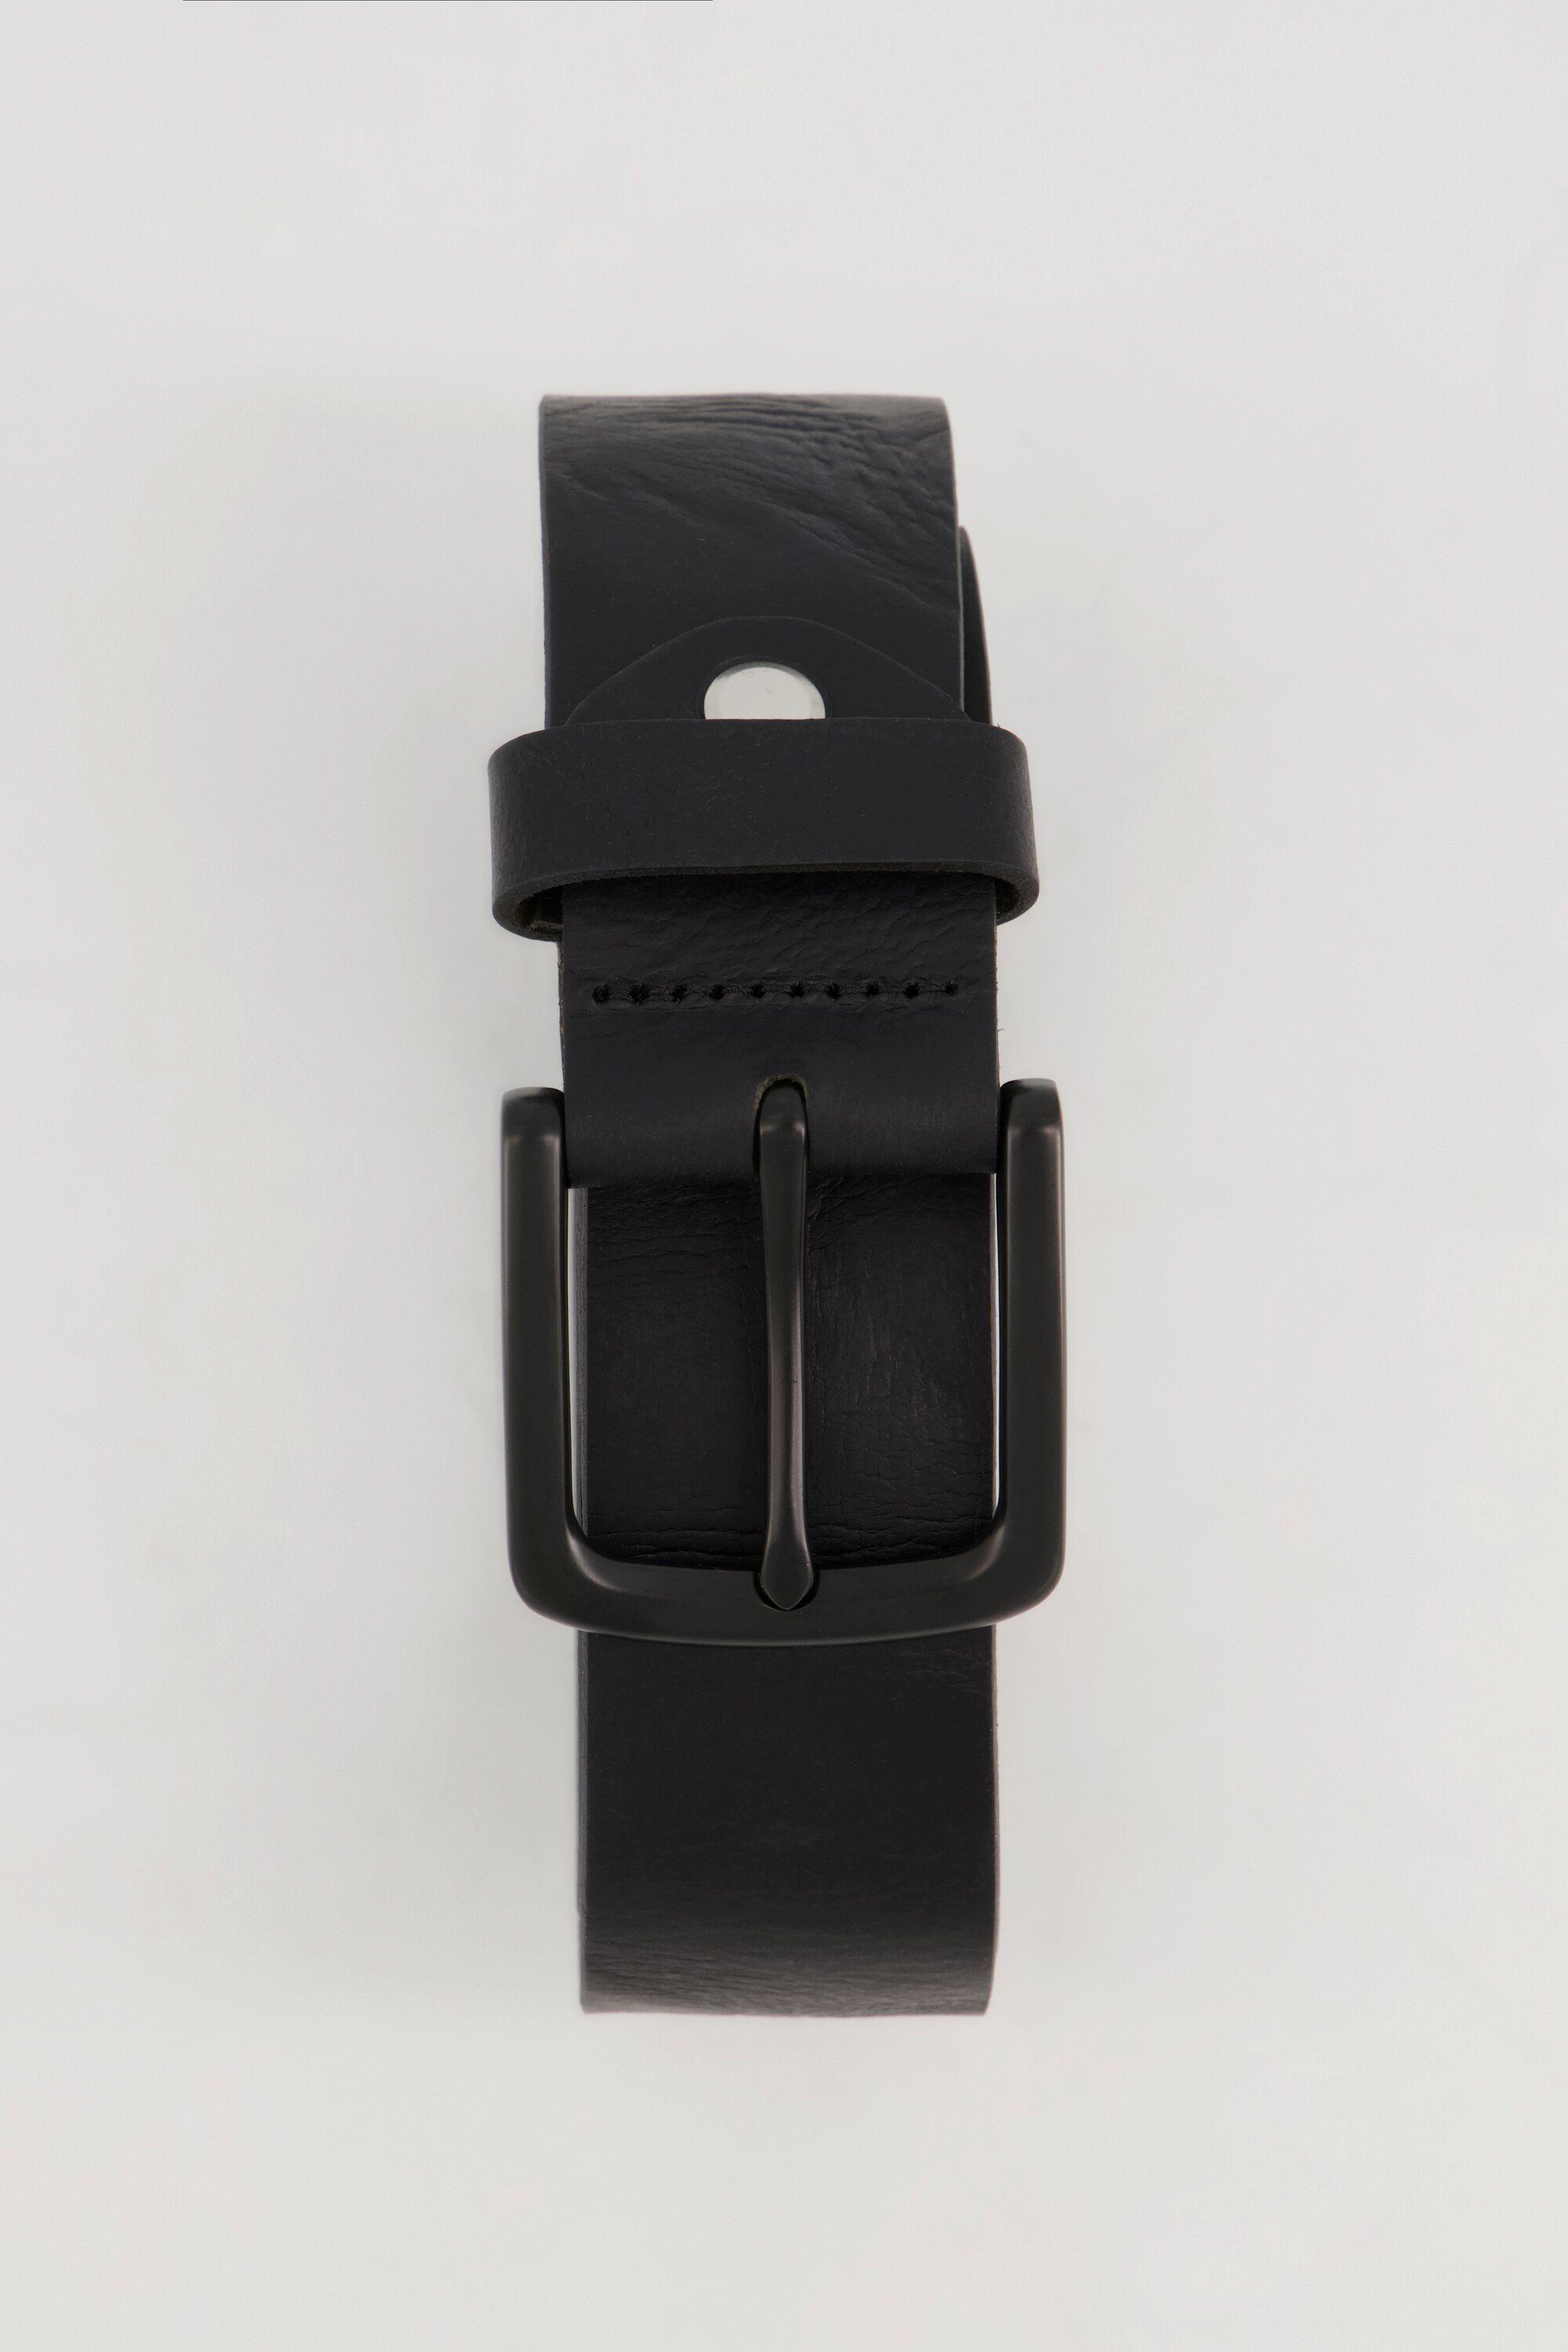 Hüftgürtel 4cm JP1880 breit schwarz Metall-Schließe Leder-Gürtel